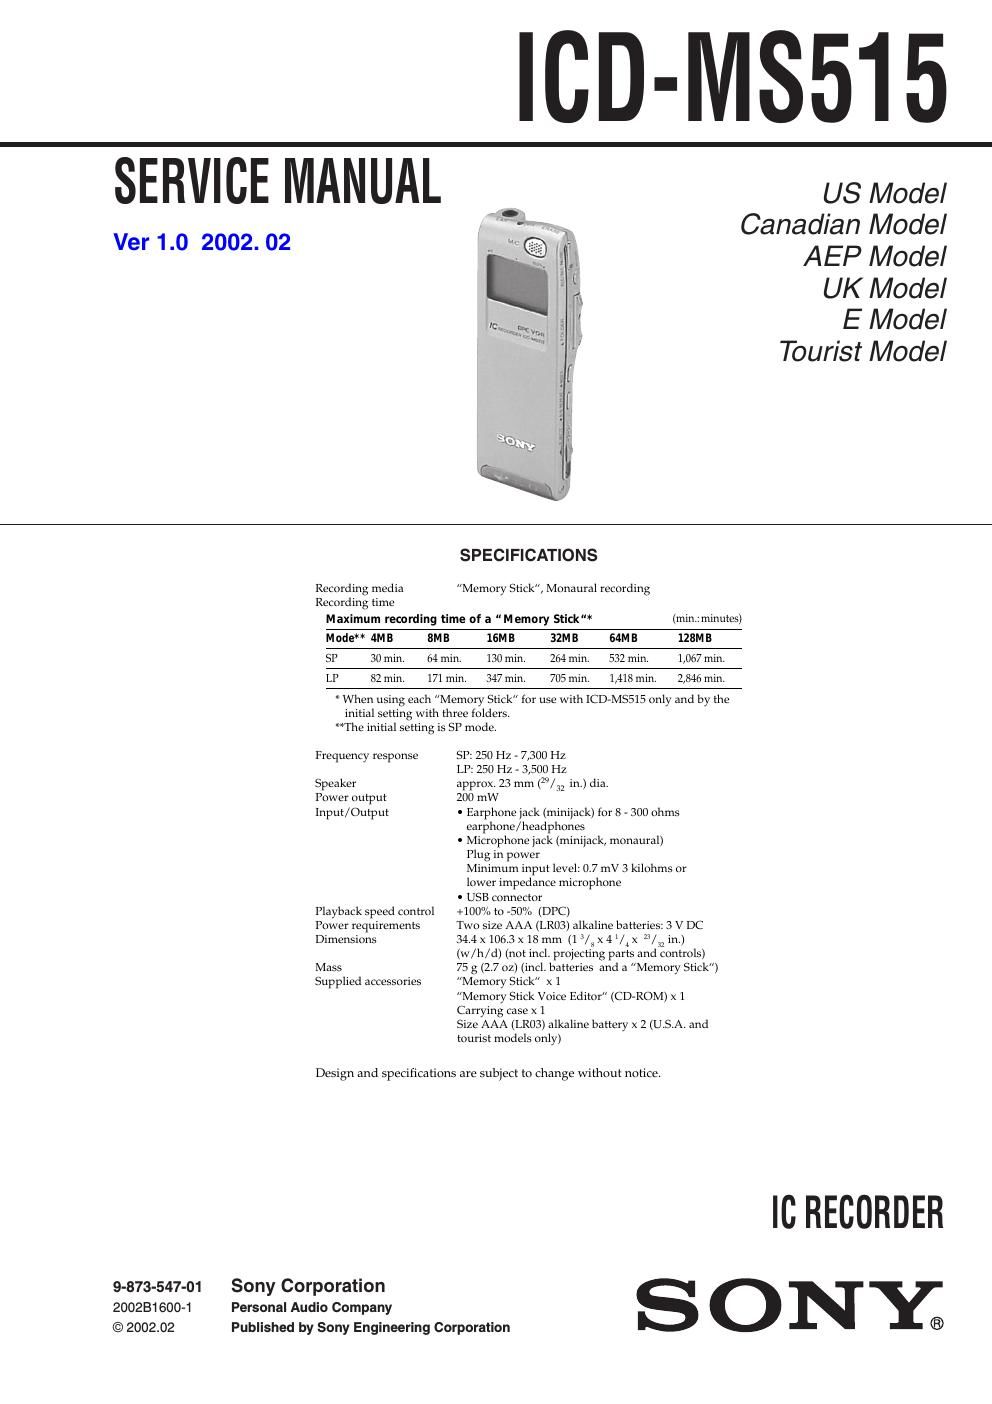 sony icd ms 515 service manual